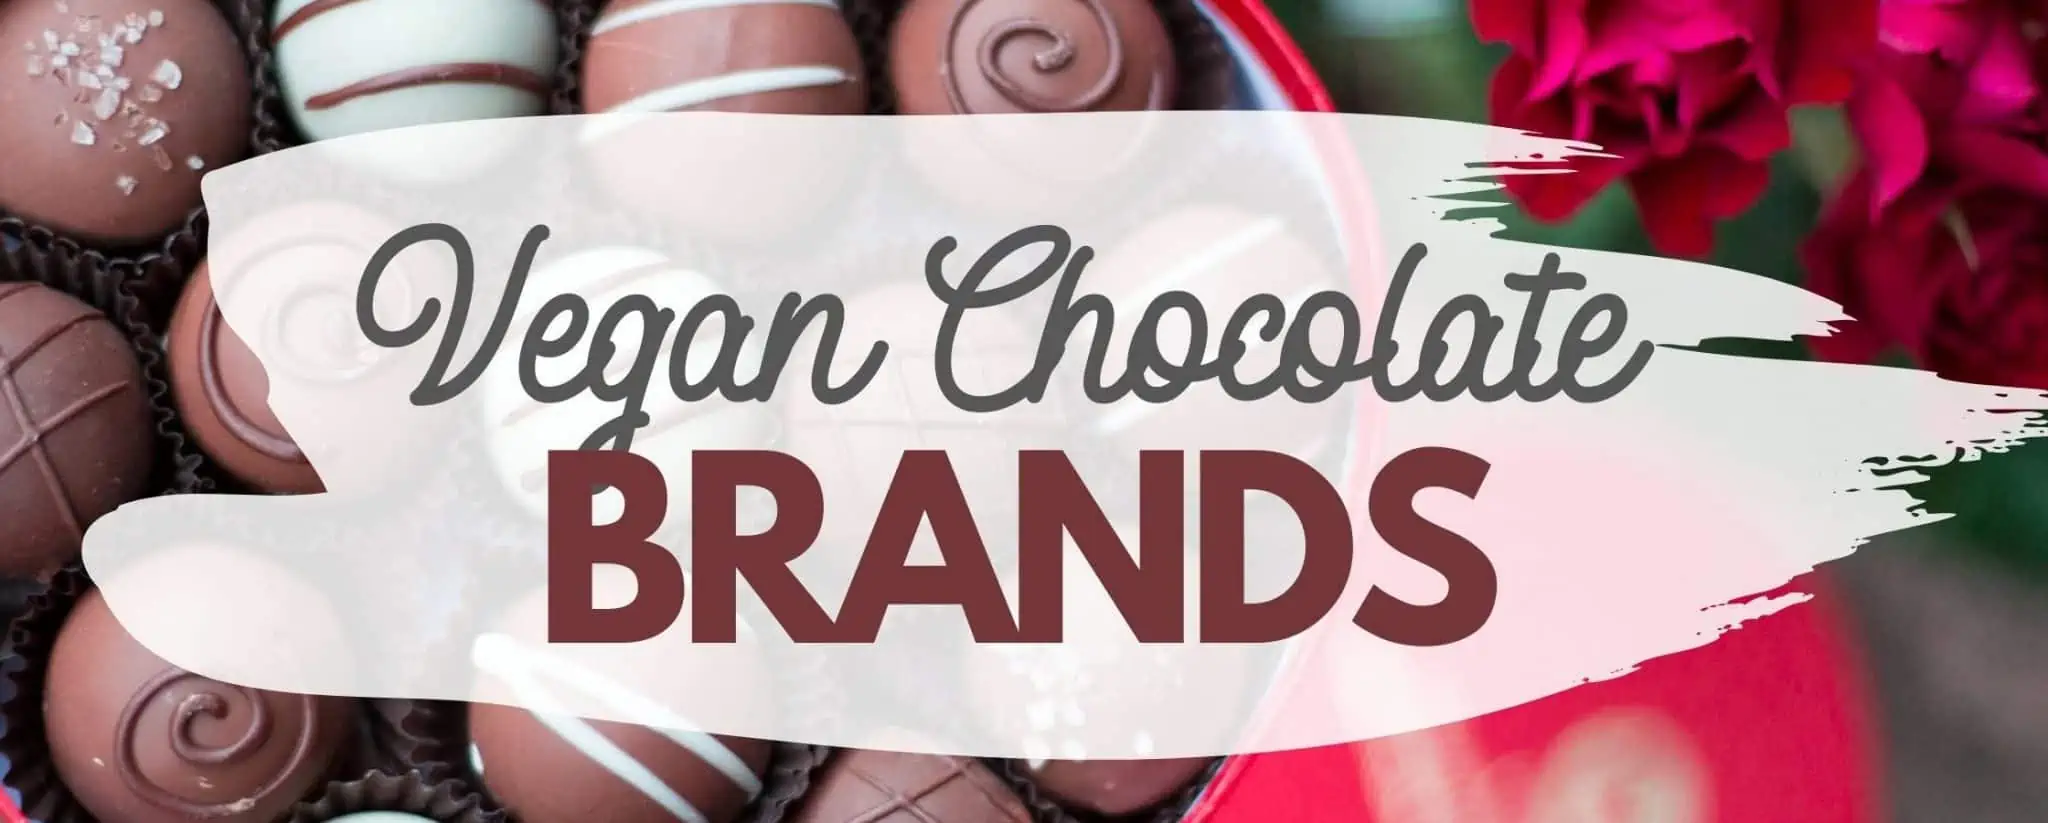 Best Vegan Chocolate Brands List